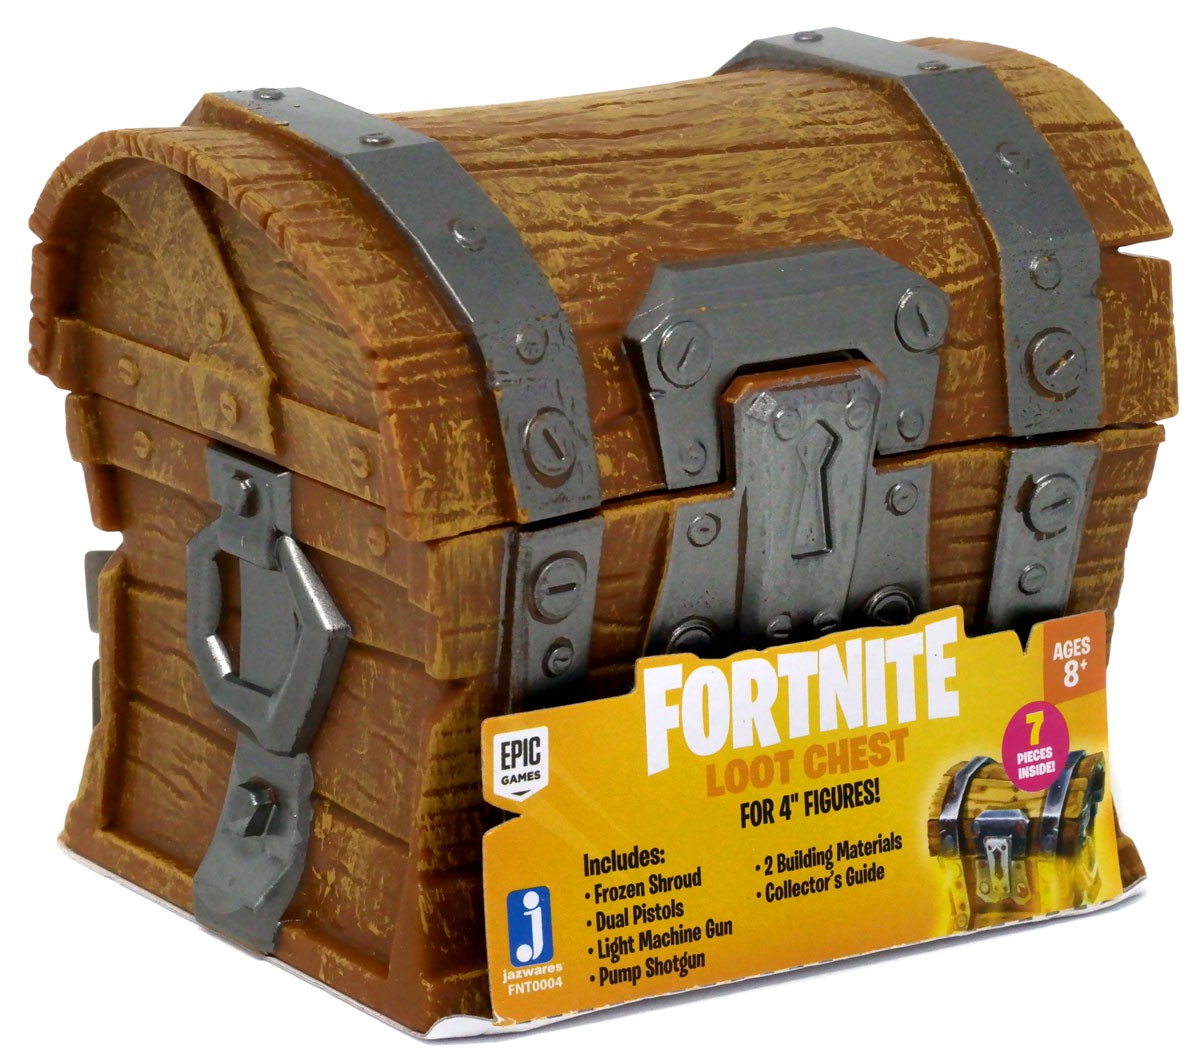 Fortnite Toy Box Fortnite Frozen Shroud Loot Chest 191726006084 Ebay